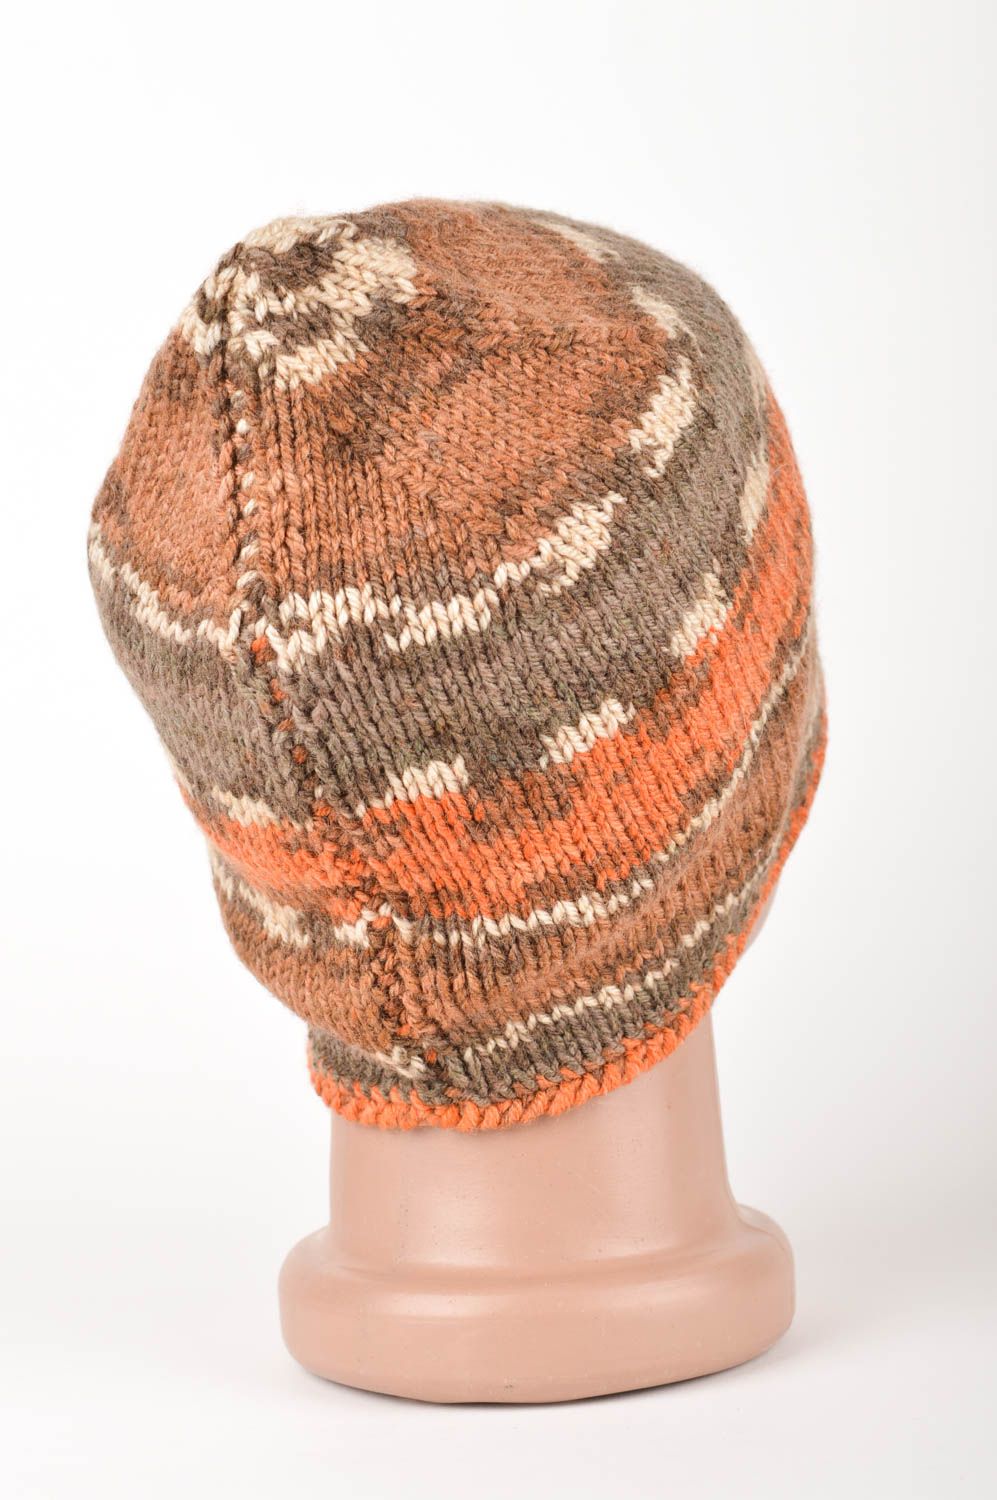 Crochet hat handmade winter hat crochet accessories best hats gifts ideas photo 5